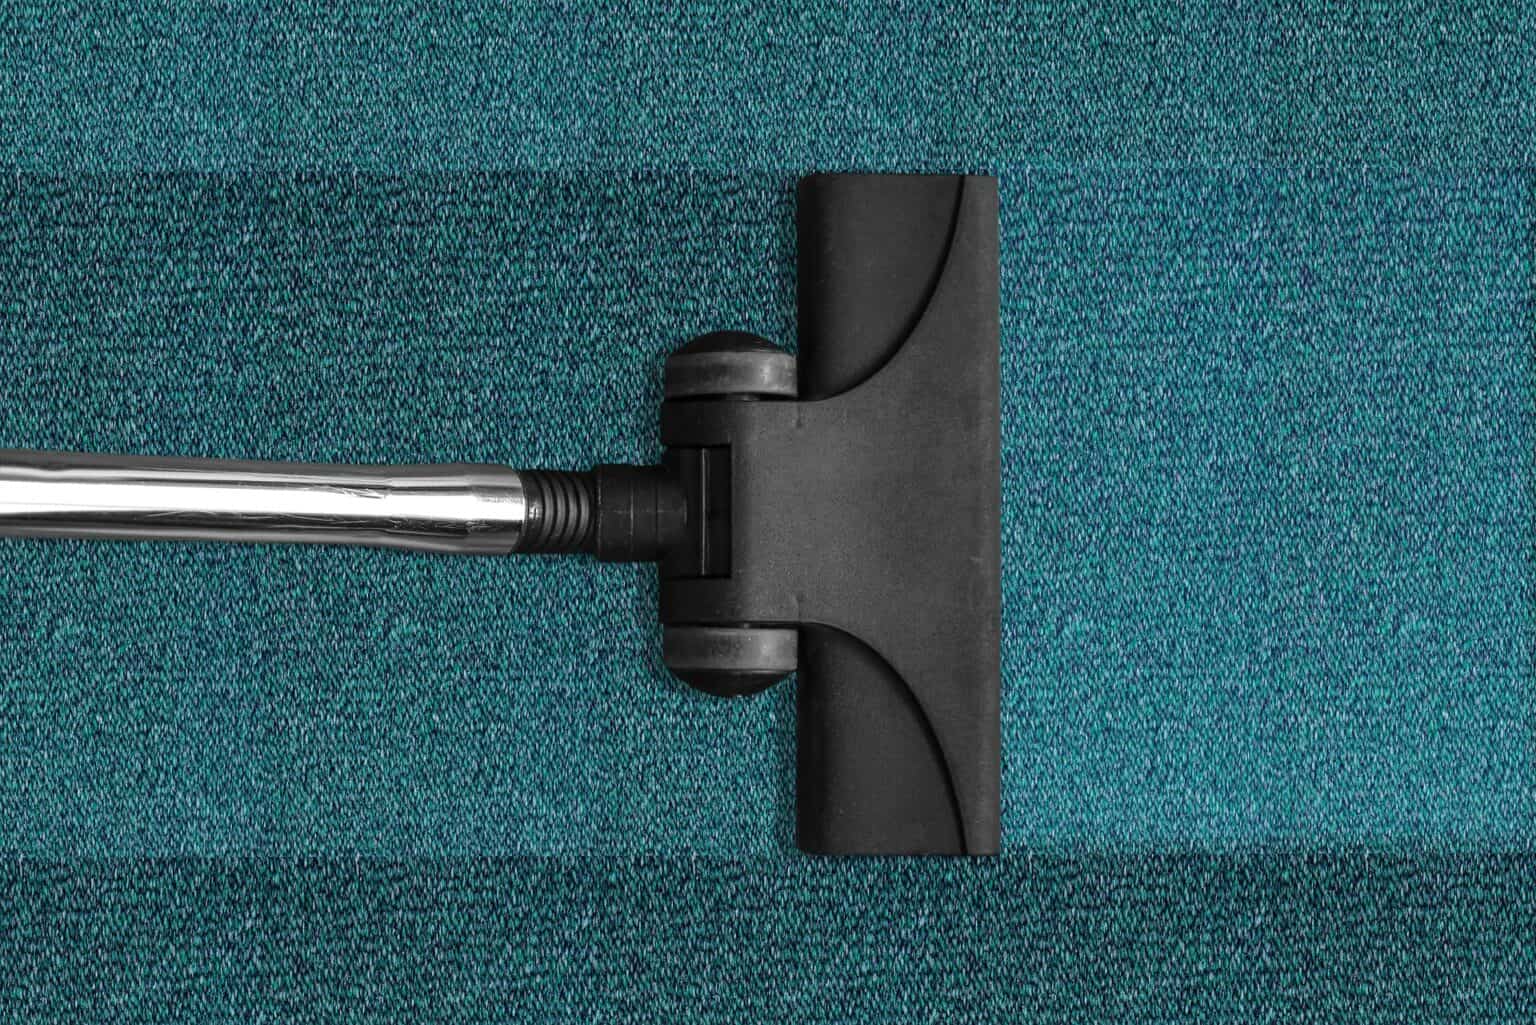 green carpet and vacuum cleaner